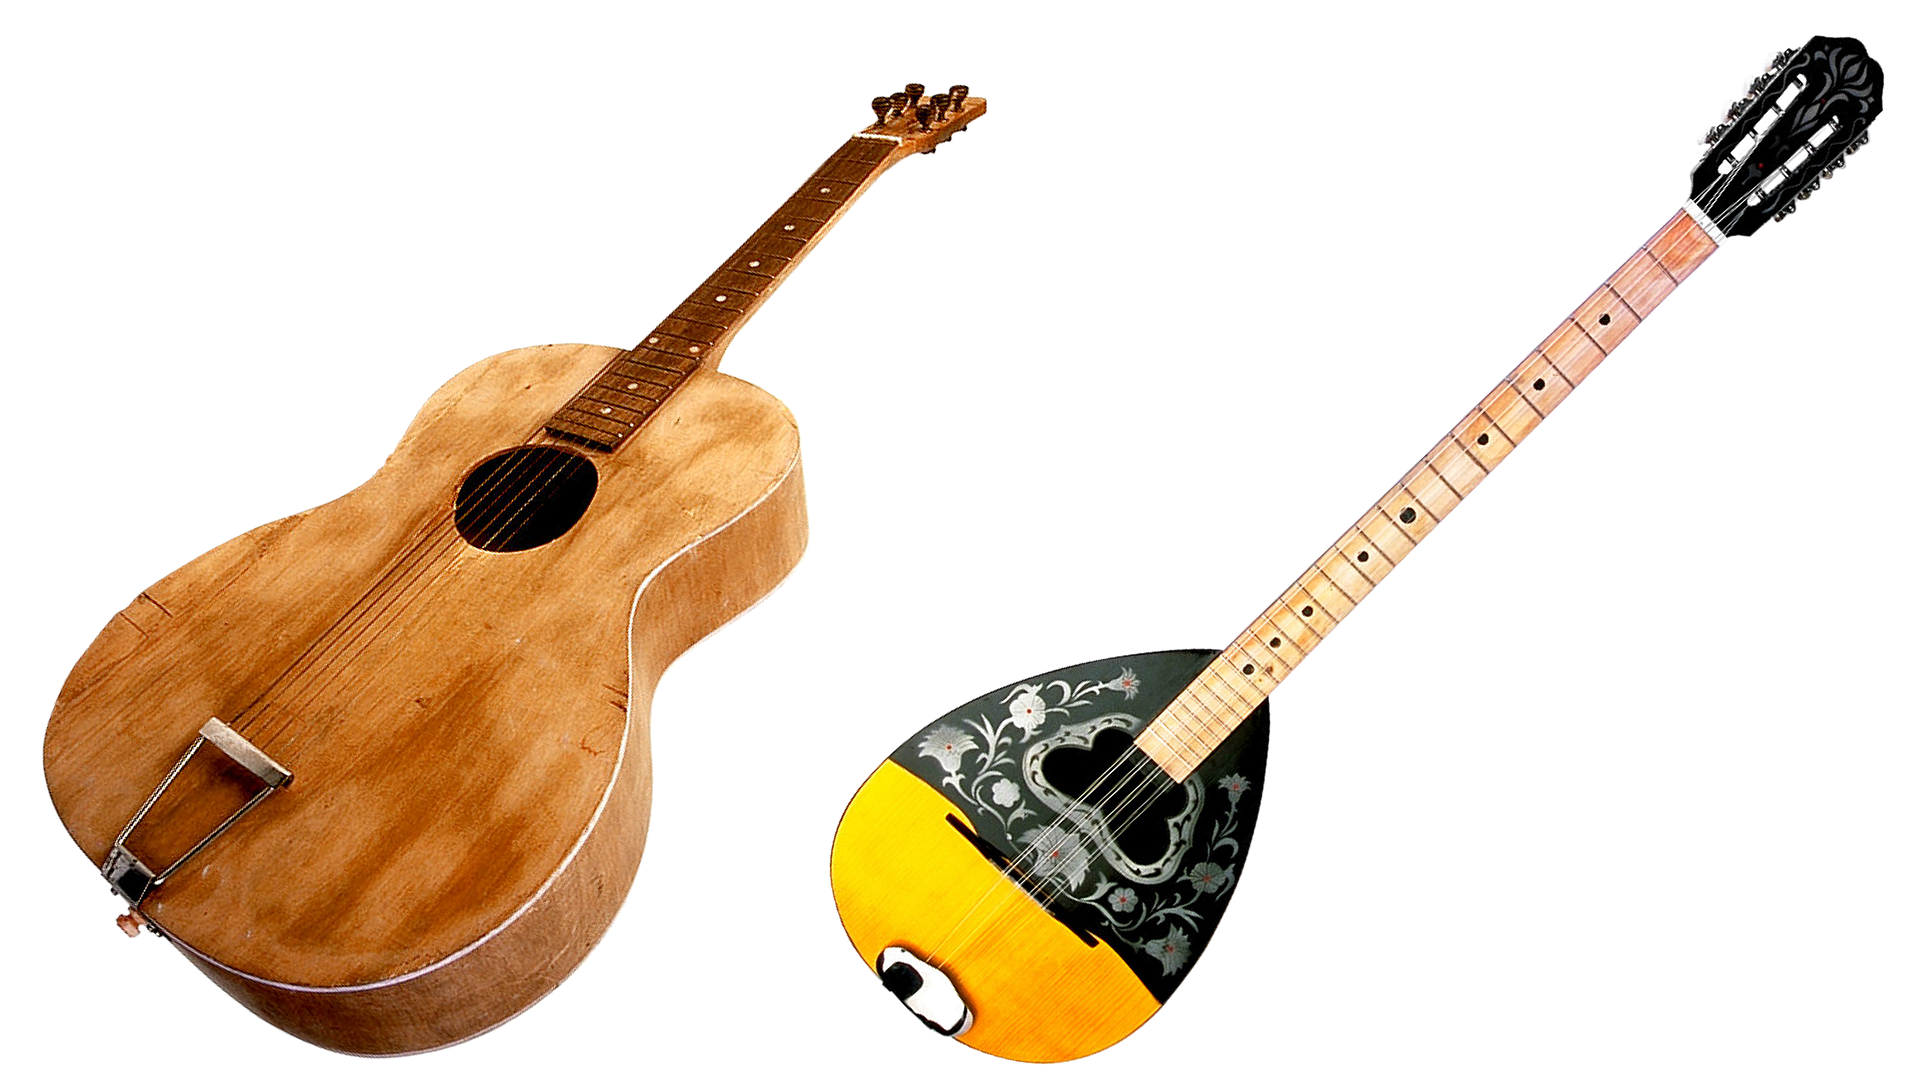 Two guitars photo